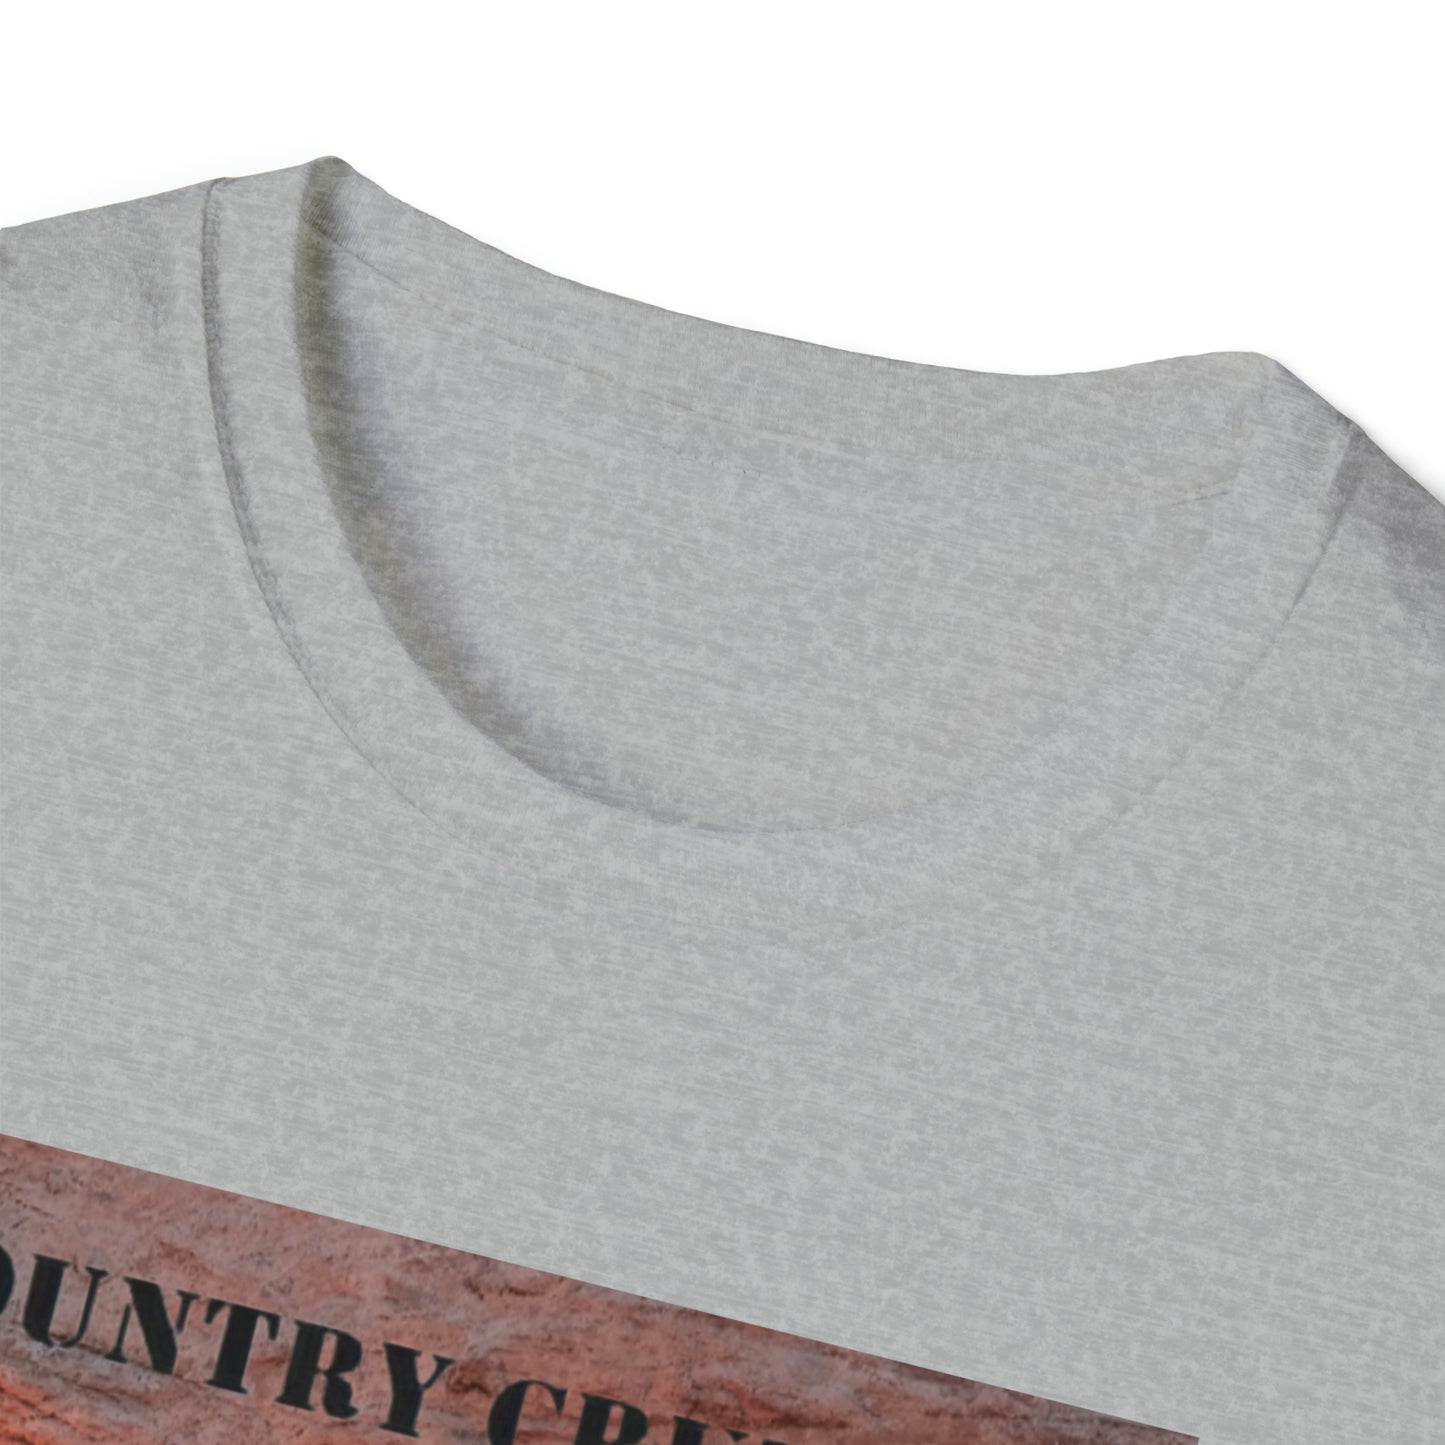 Country Cruzerz - Apache Unisex Softstyle T-Shirt